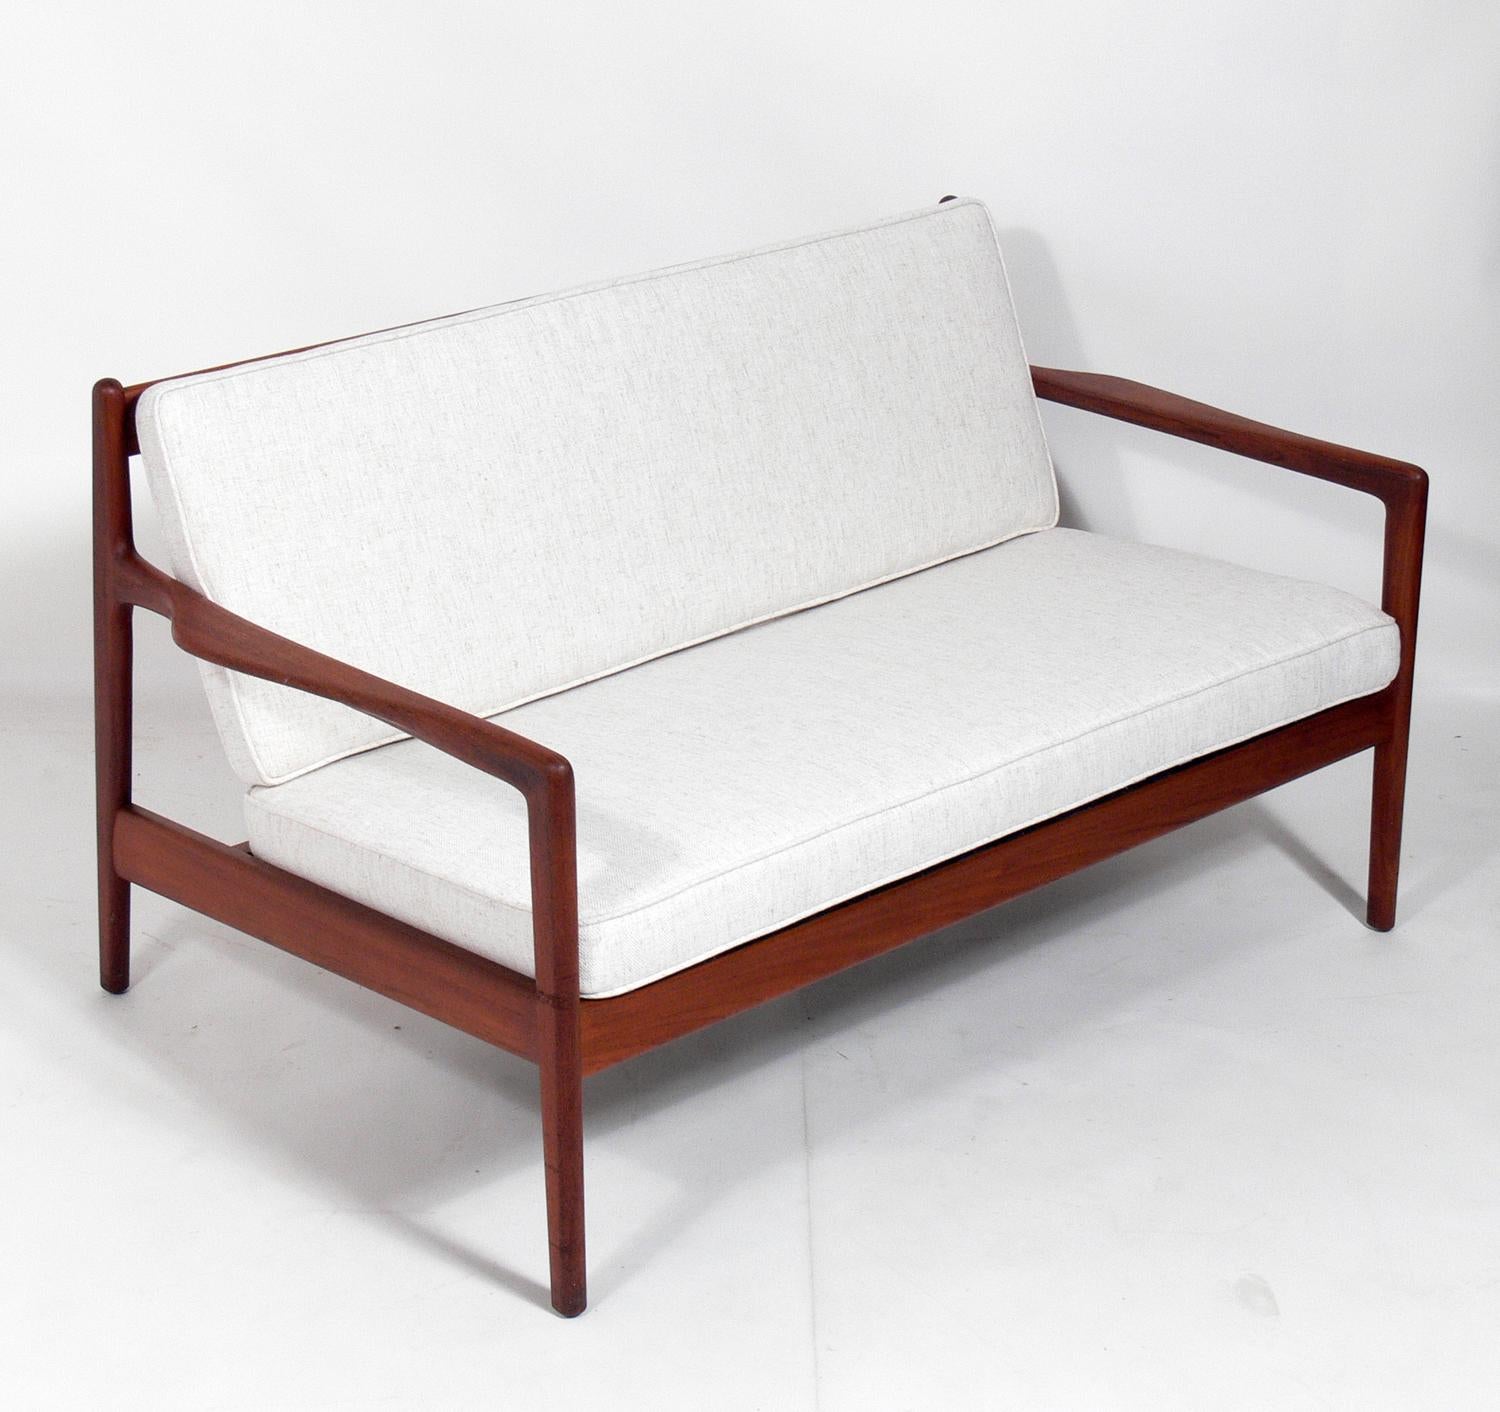 Danish modern teak settee or sofa, designed by Folke Ohlsson for DUX, Sweden, circa 1960s. It has been reupholstered in an ivory color herringbone upholstery. Teak frame cleaned and Danish oiled.